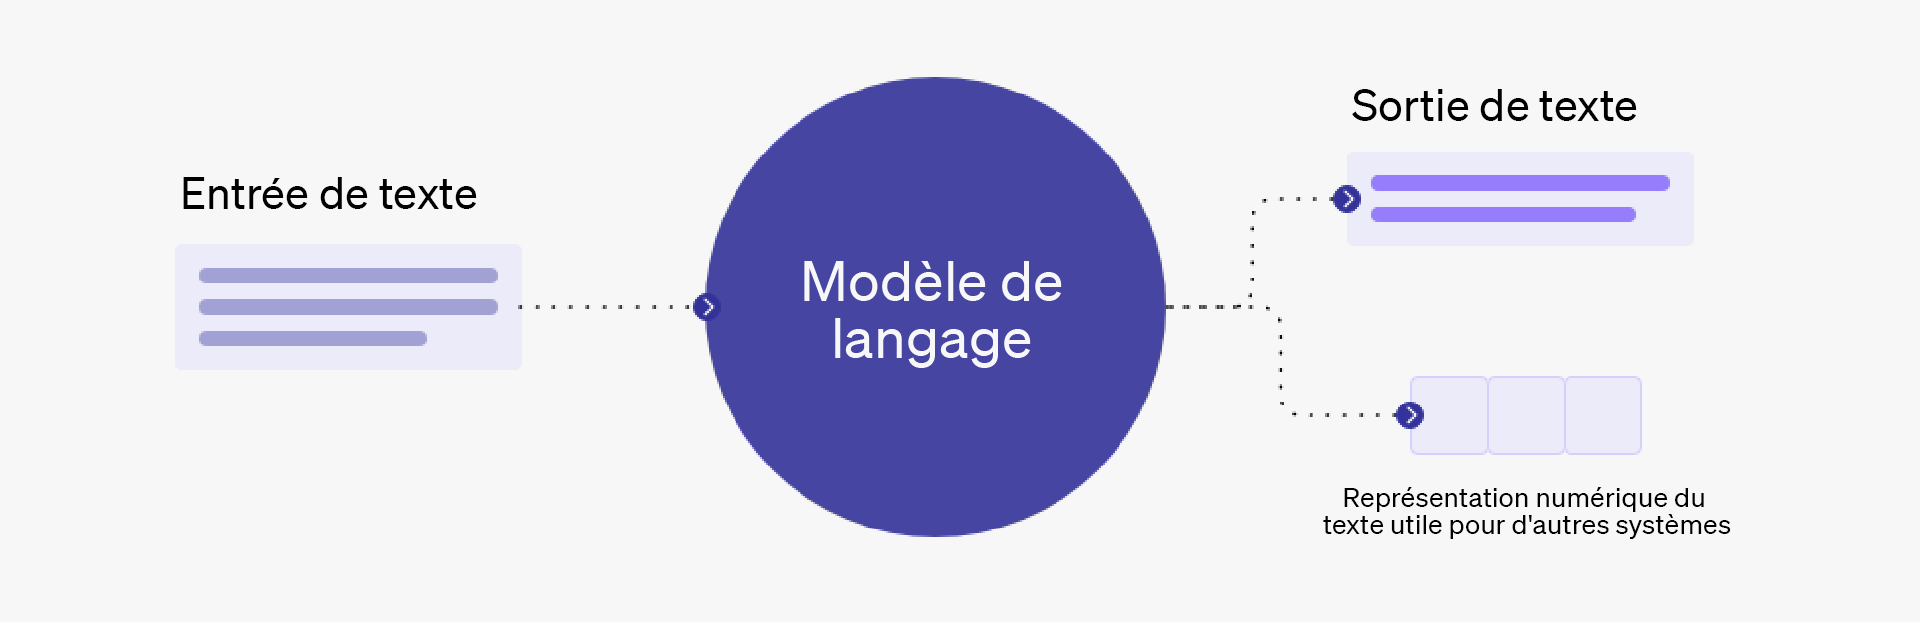 modele de langage